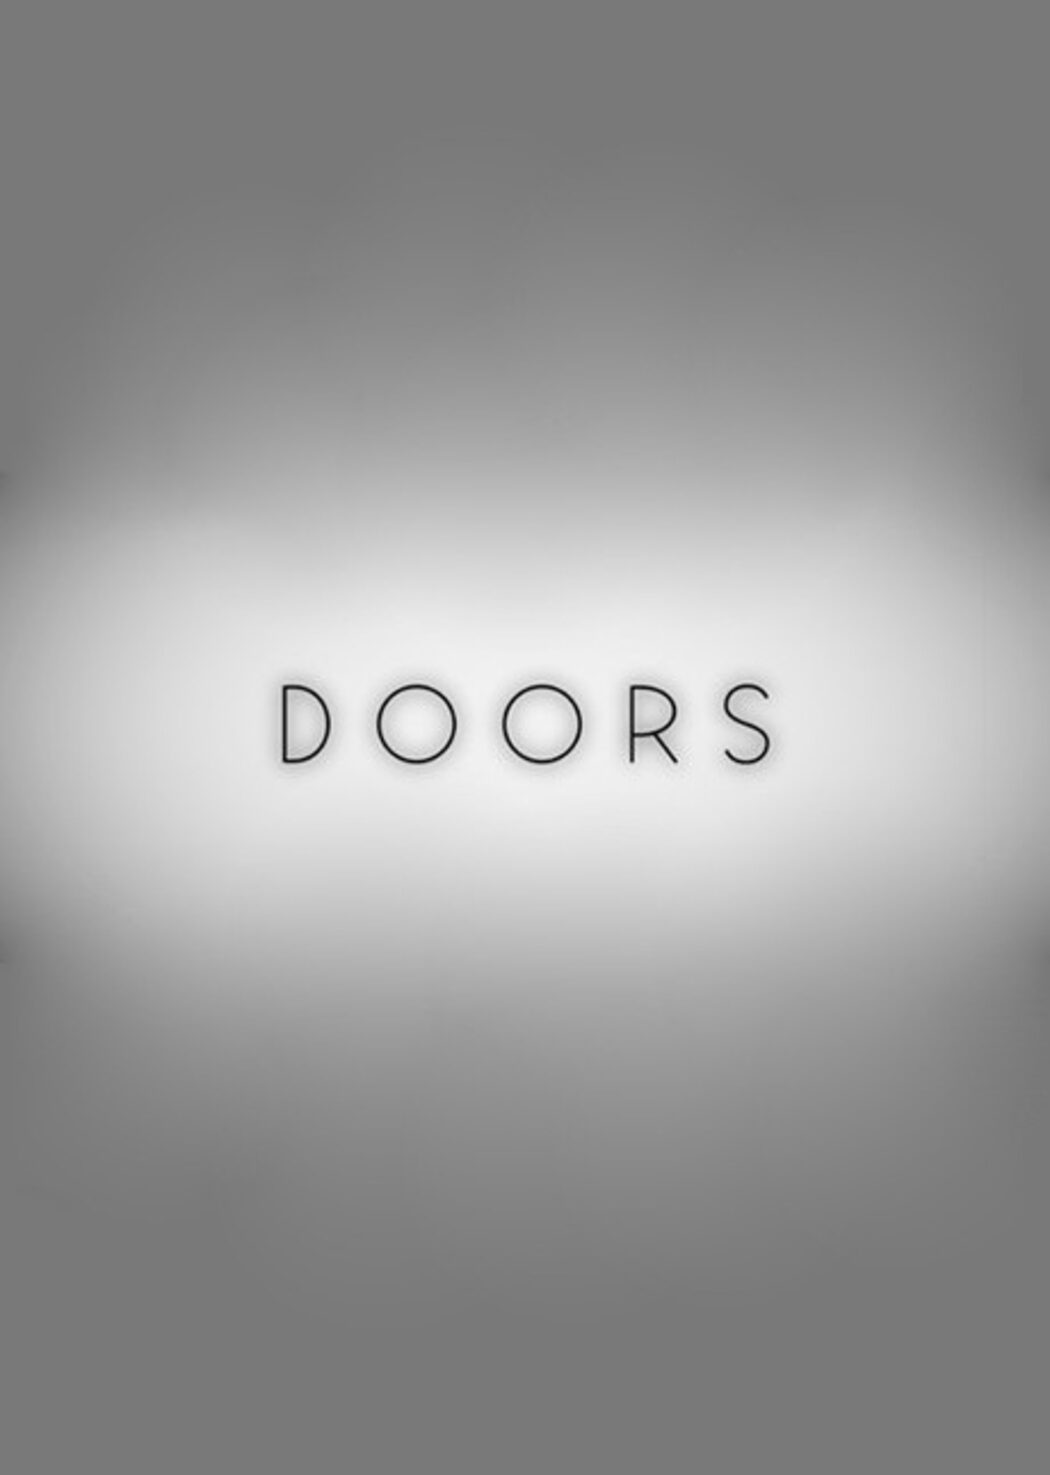 Doors on Steam